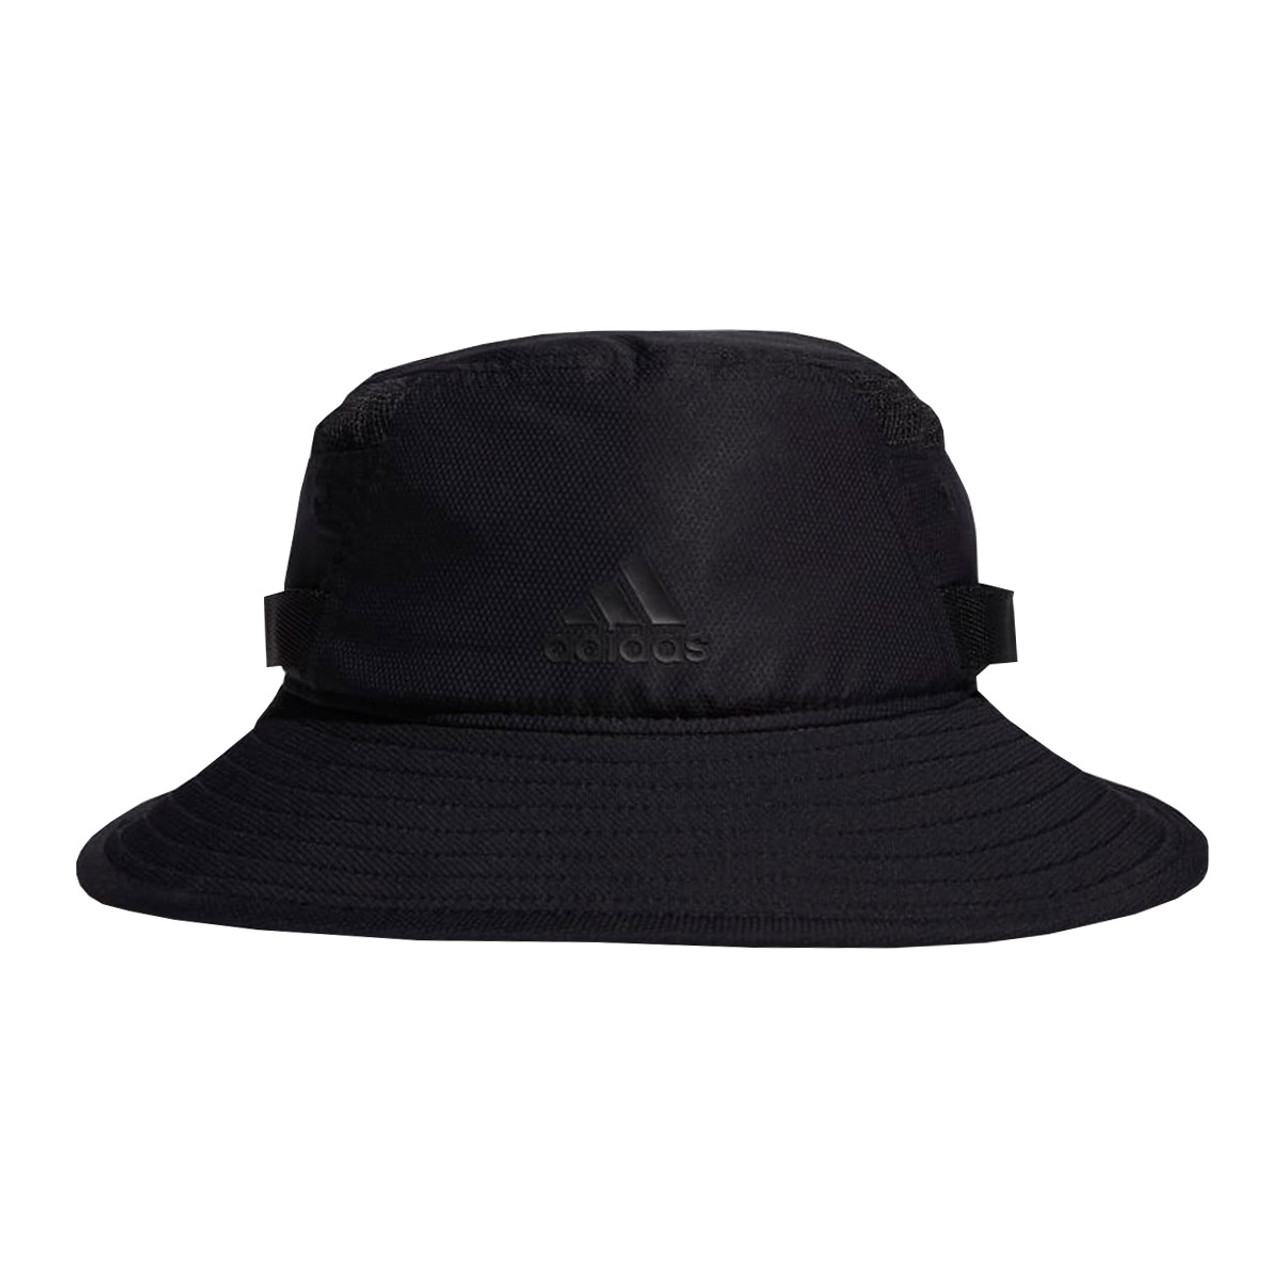 Adidas Victory III Men's Bucket Hat